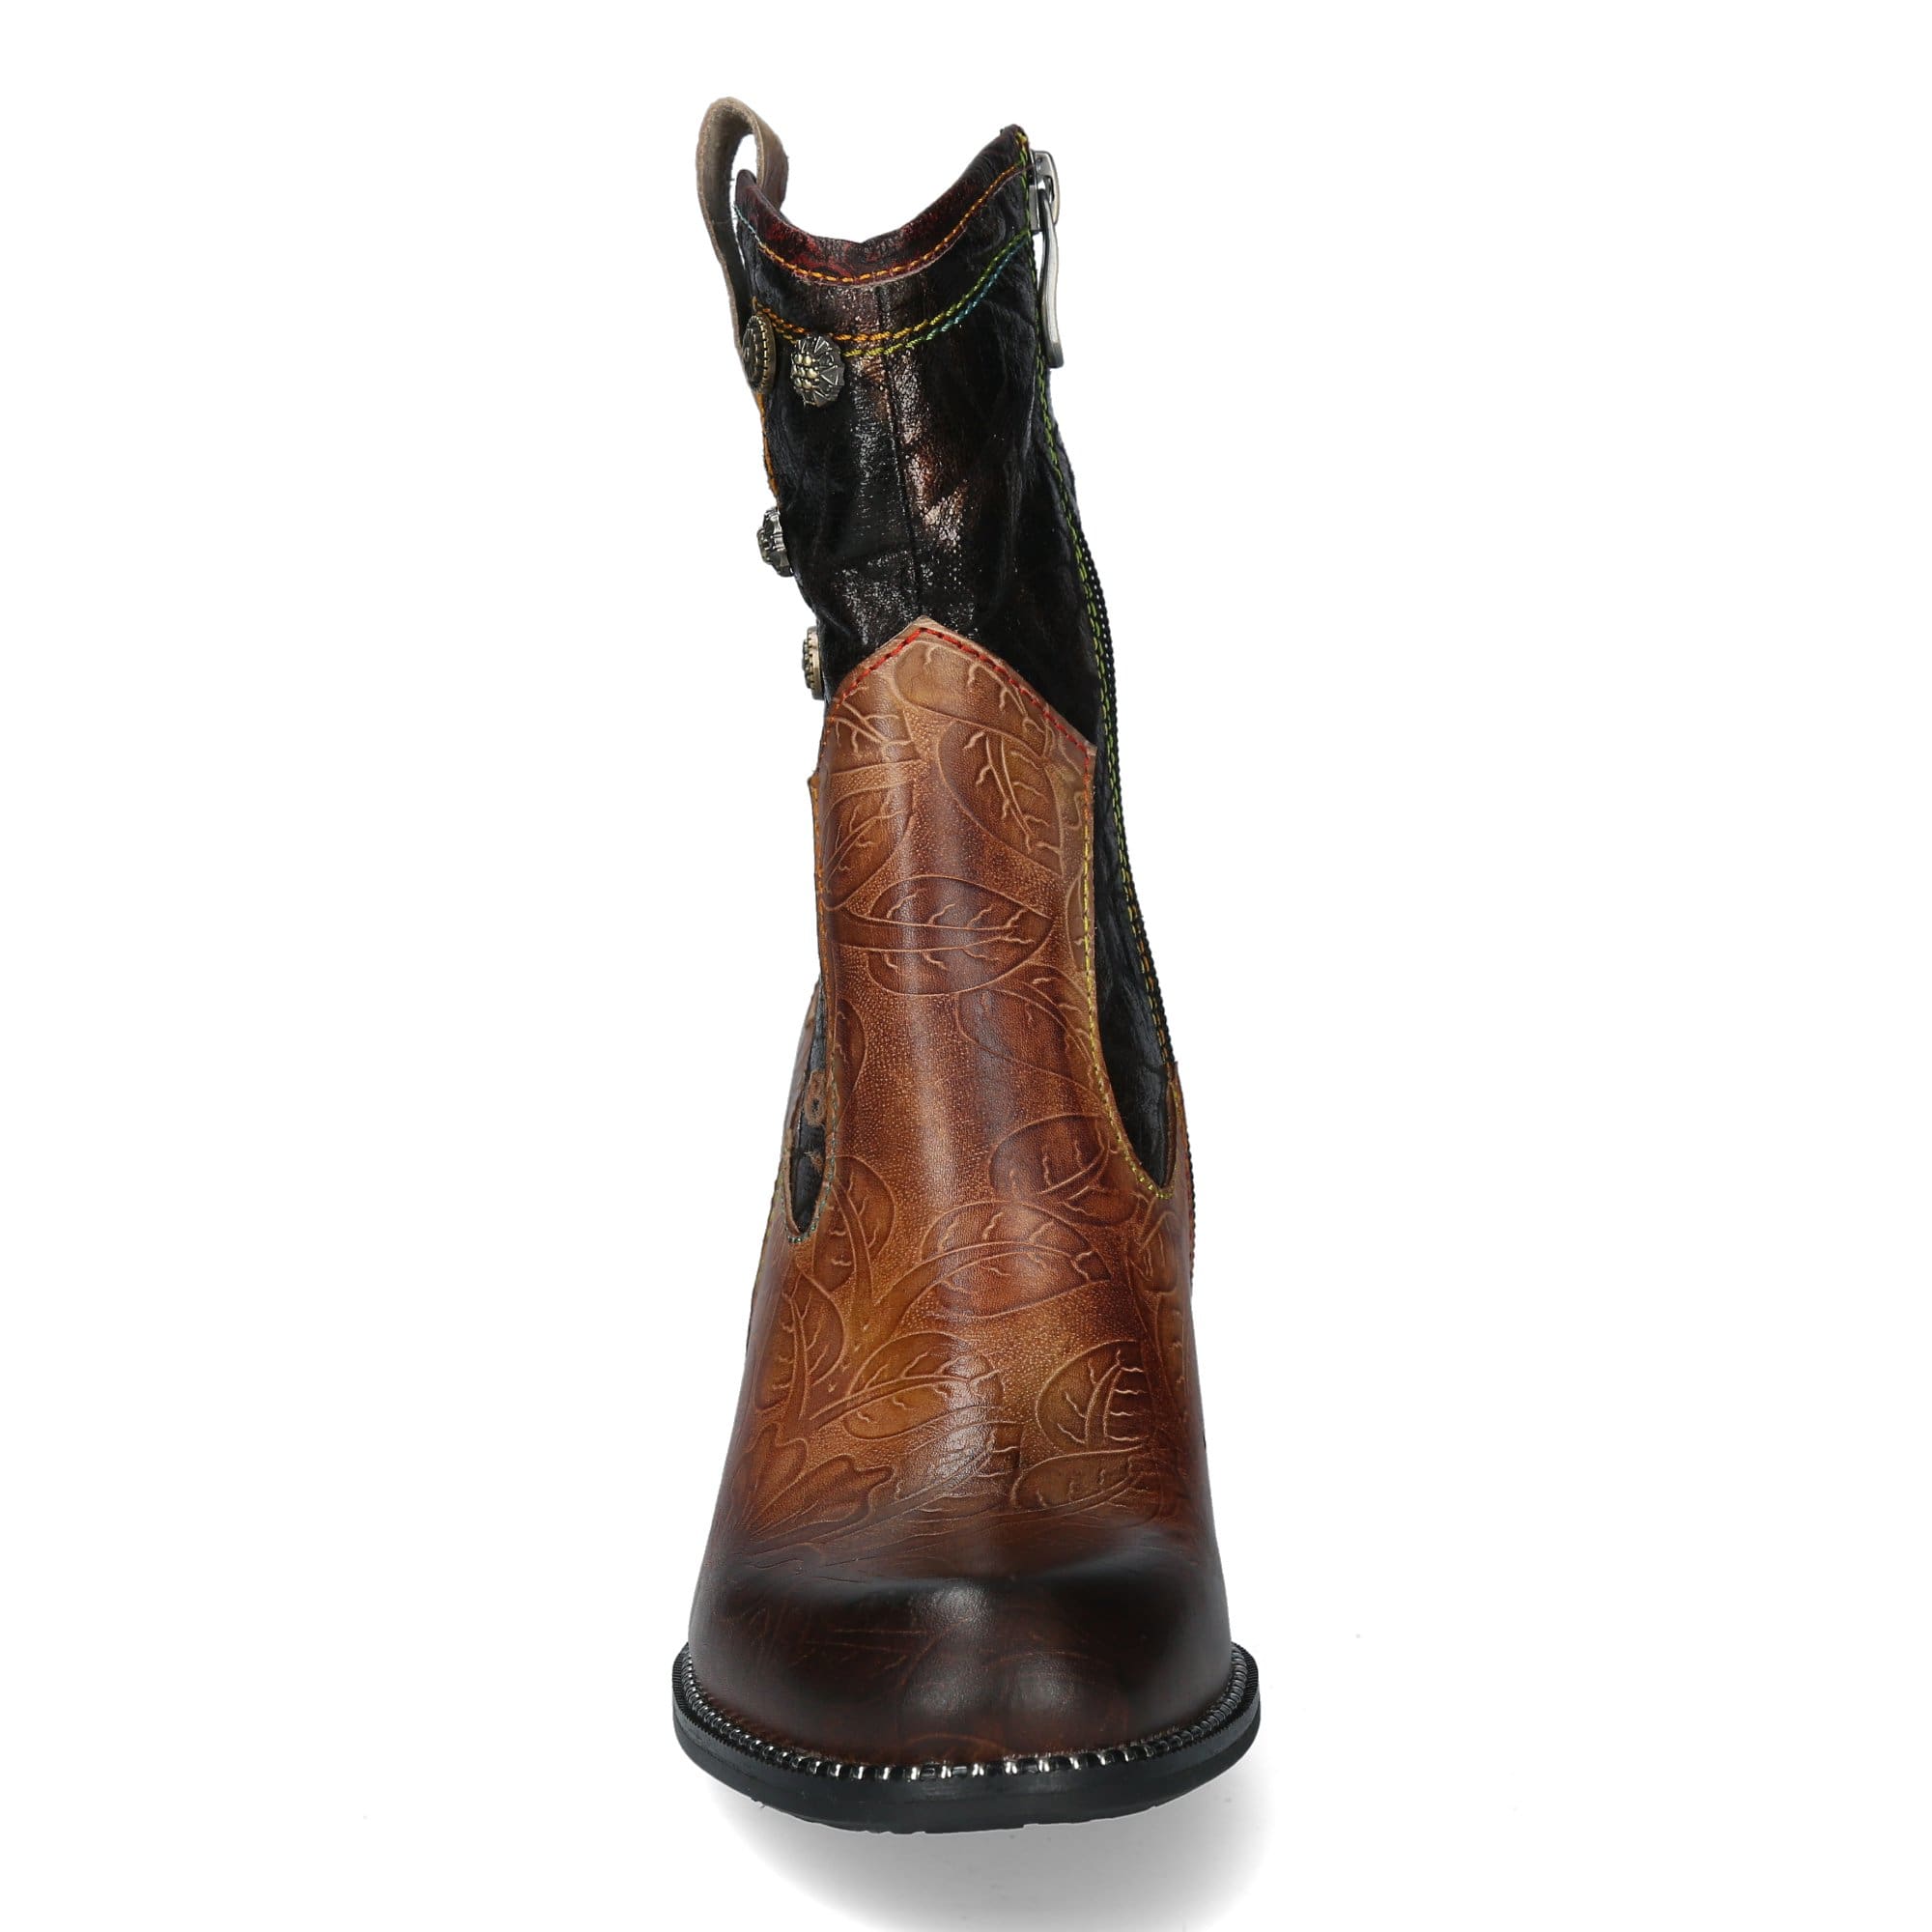 Shoe KYLAO 04 - Boots